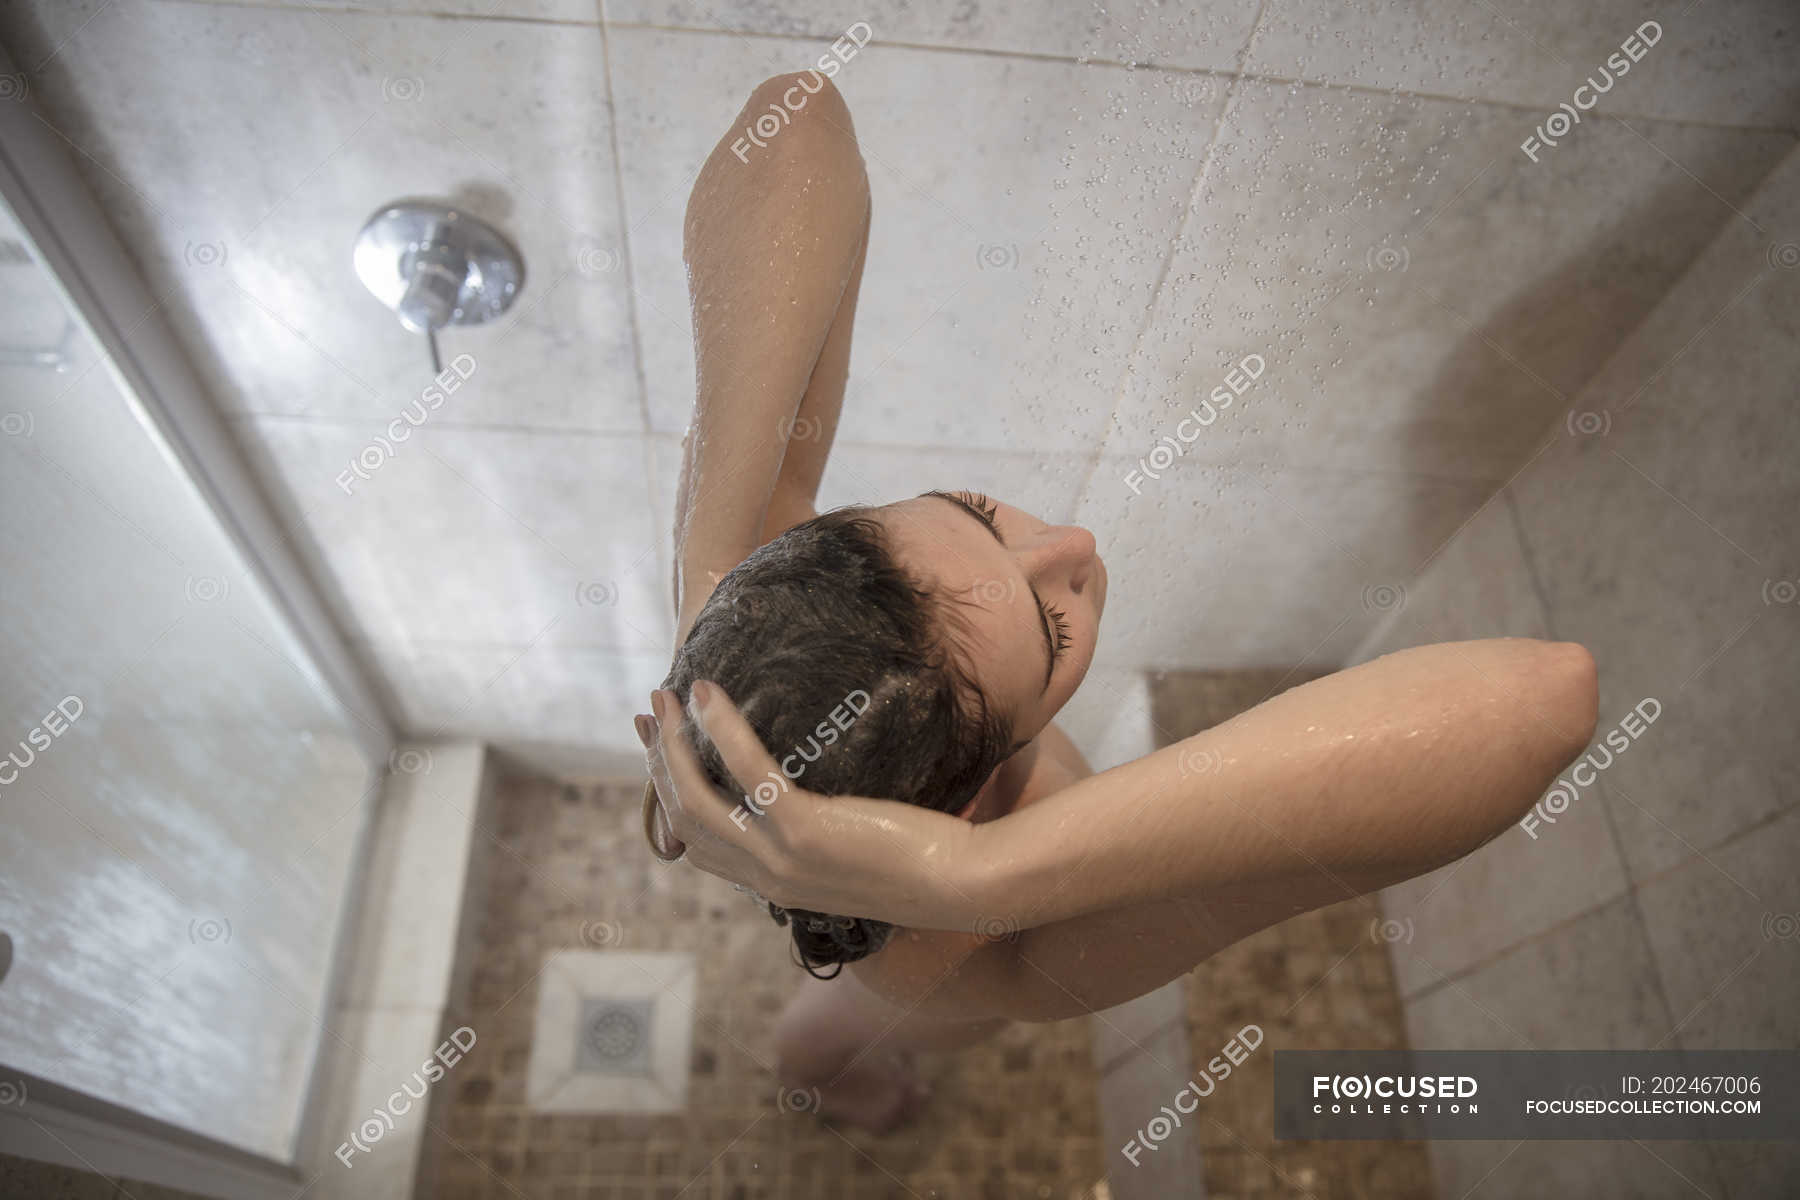 Woman Showering Pics